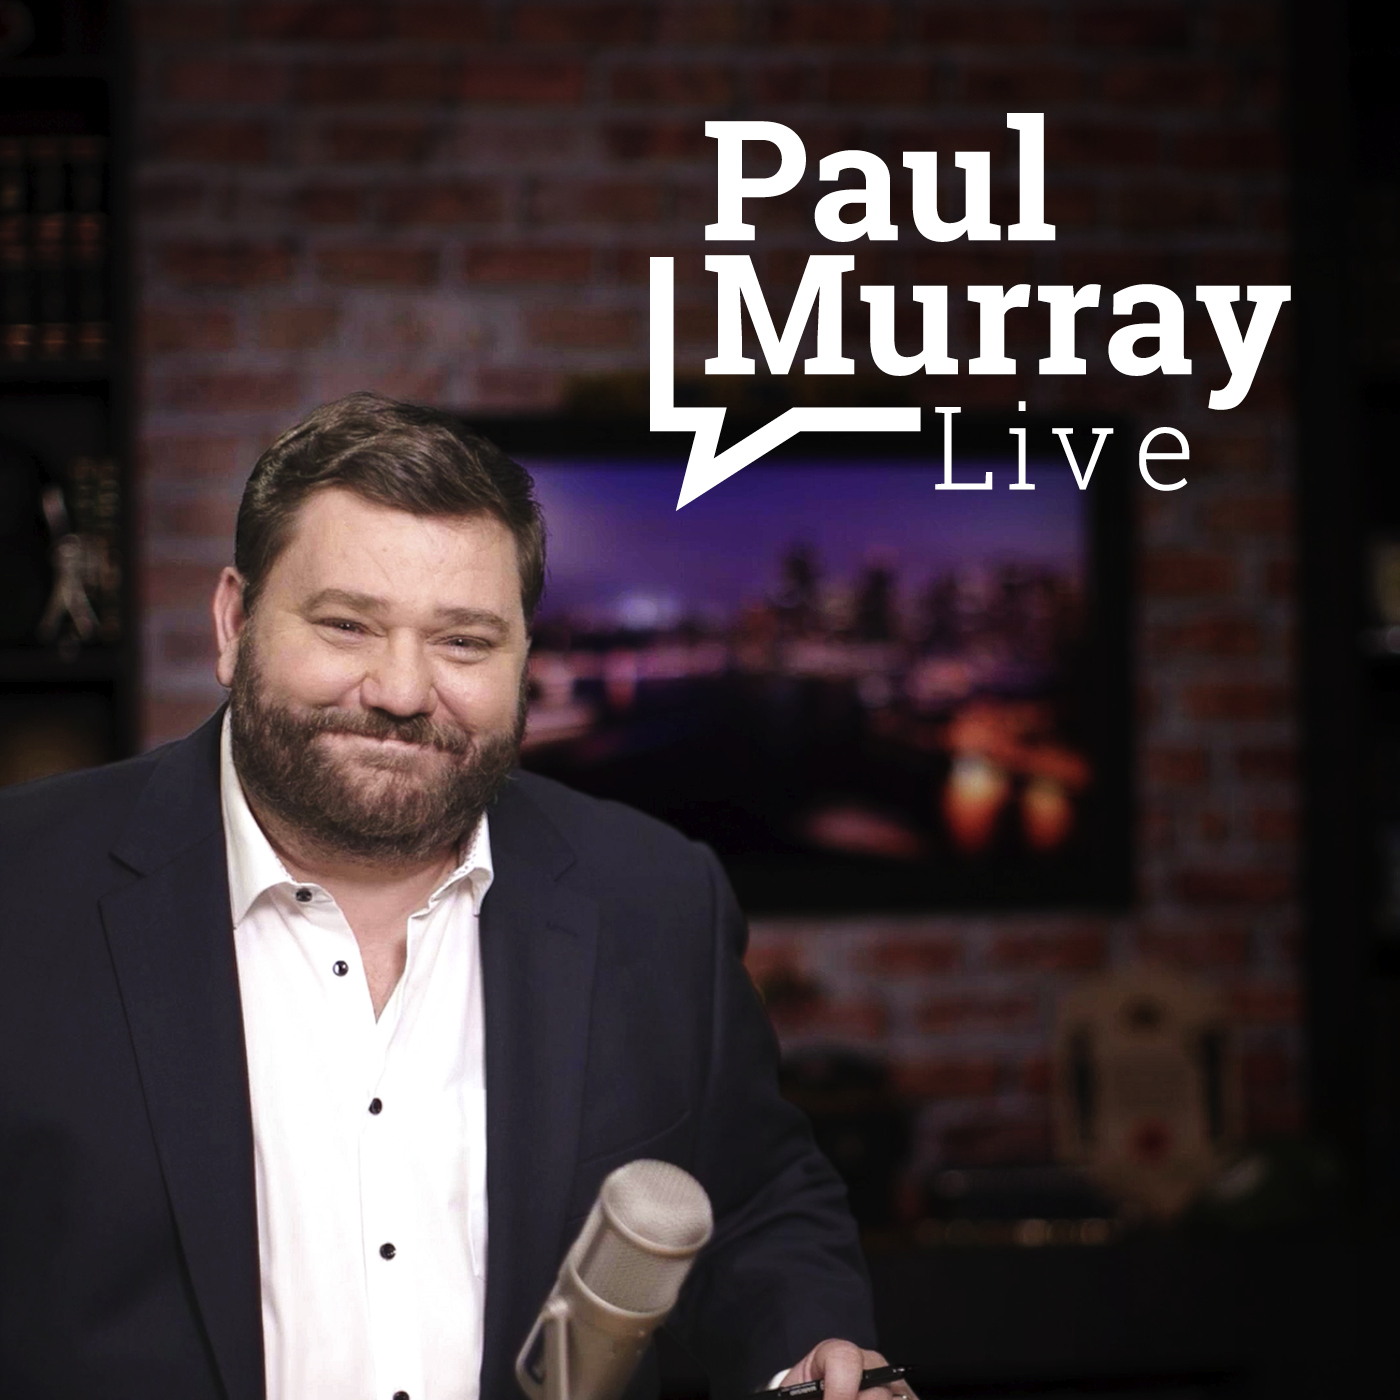 Paul Murray Live | 30 April